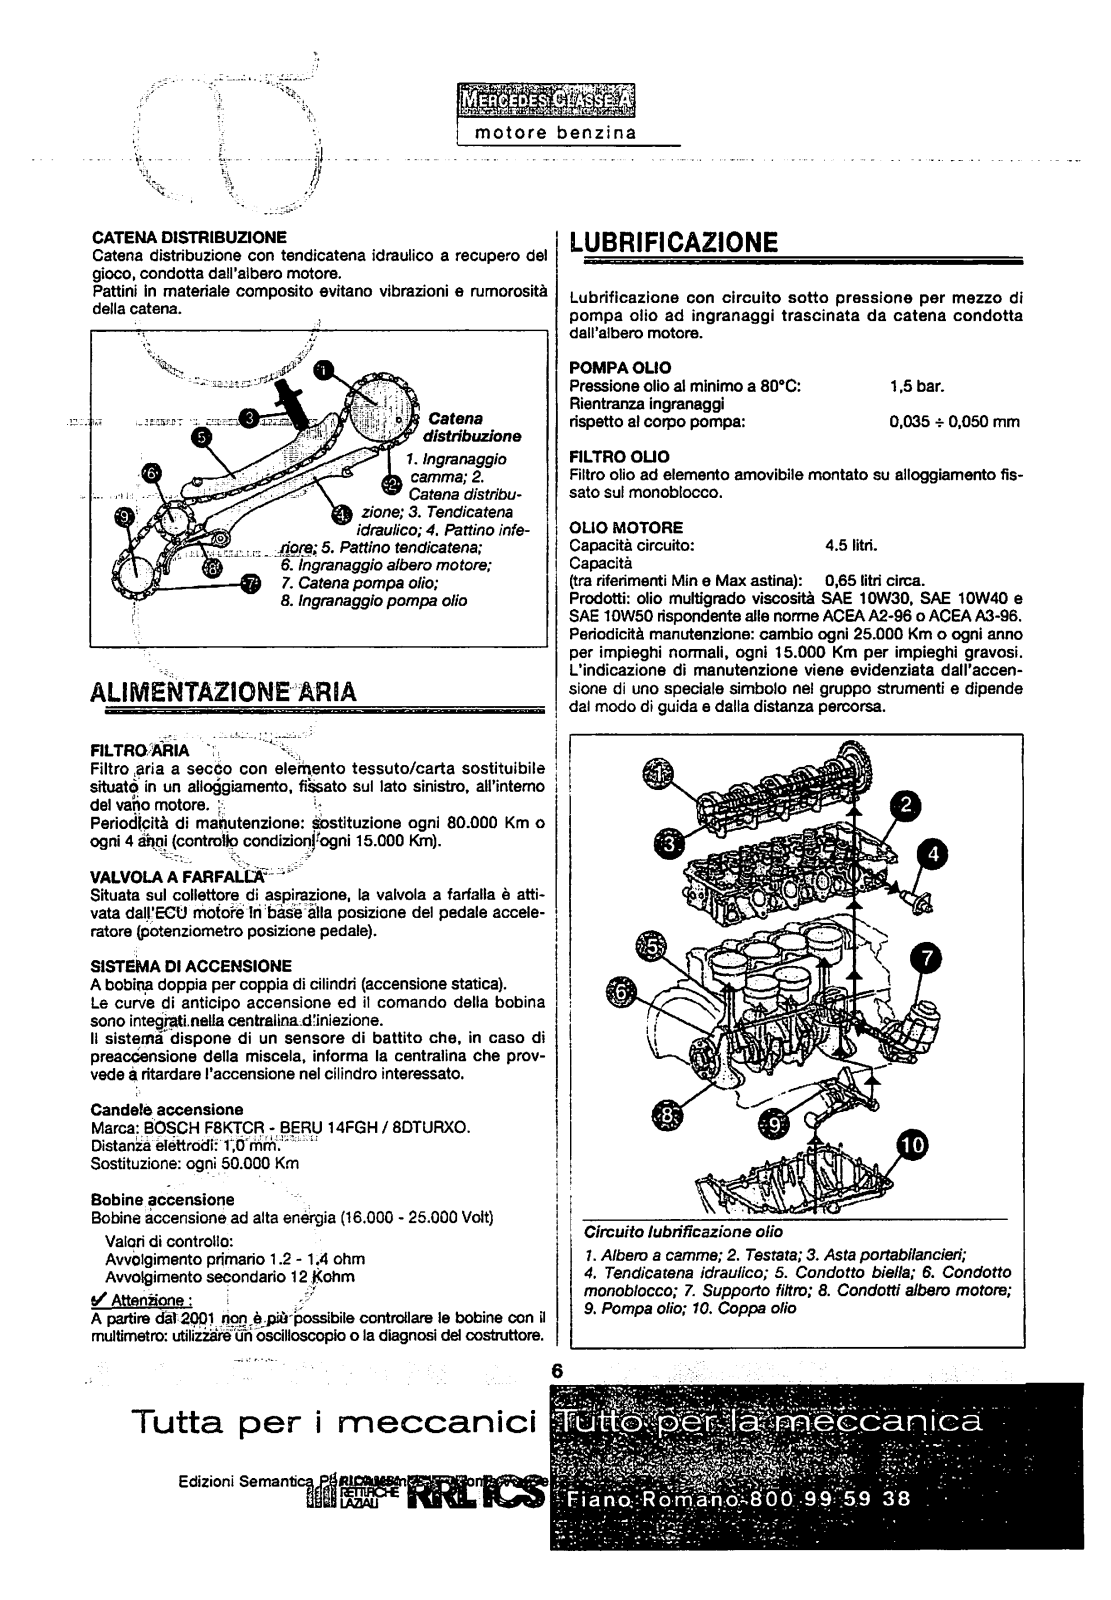 (W168): Manual técnico - tudo sobre - 1997 a 2004 - italiano 2jdovu9